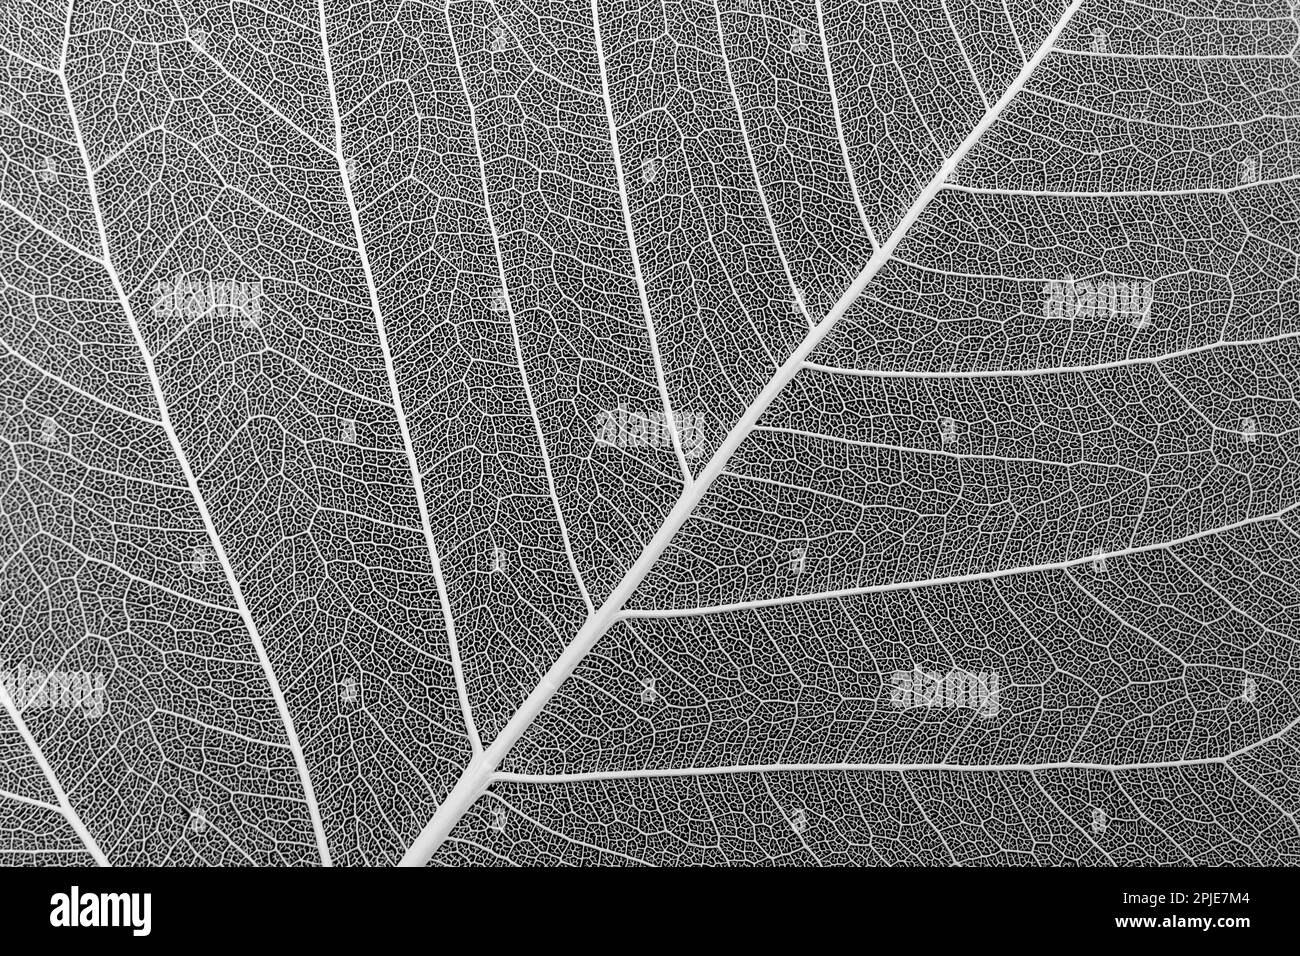 Dry leaf skeleton with white veins, on black background Stock Photo